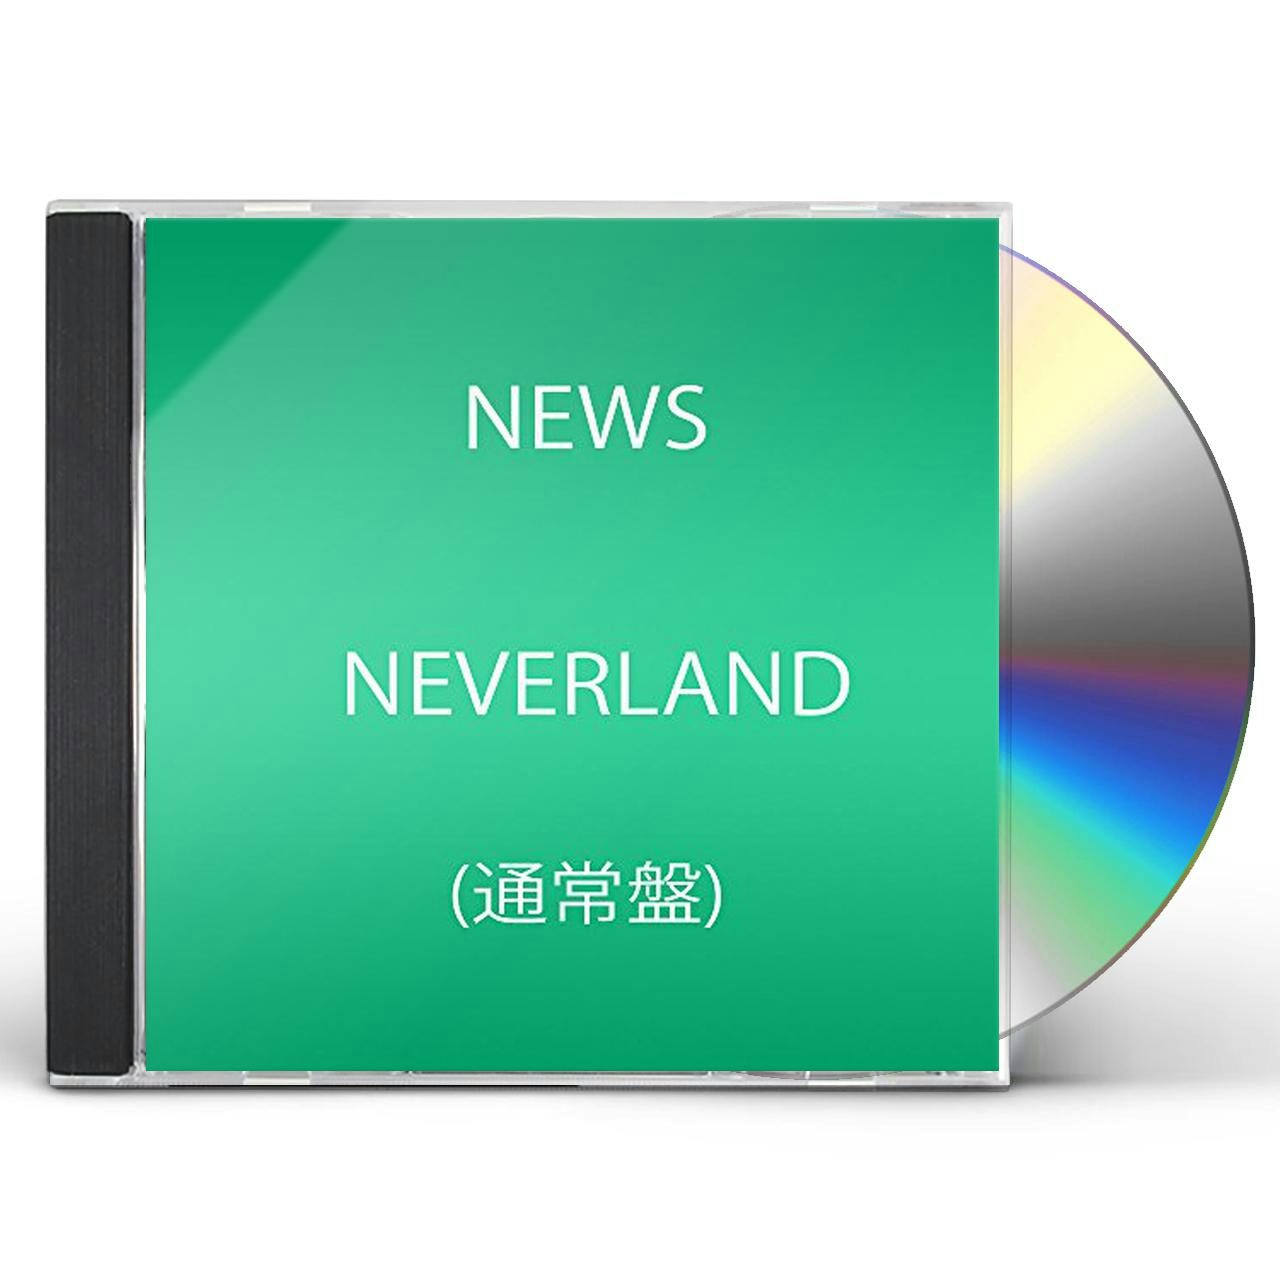 NEWS NEVERLAND CD